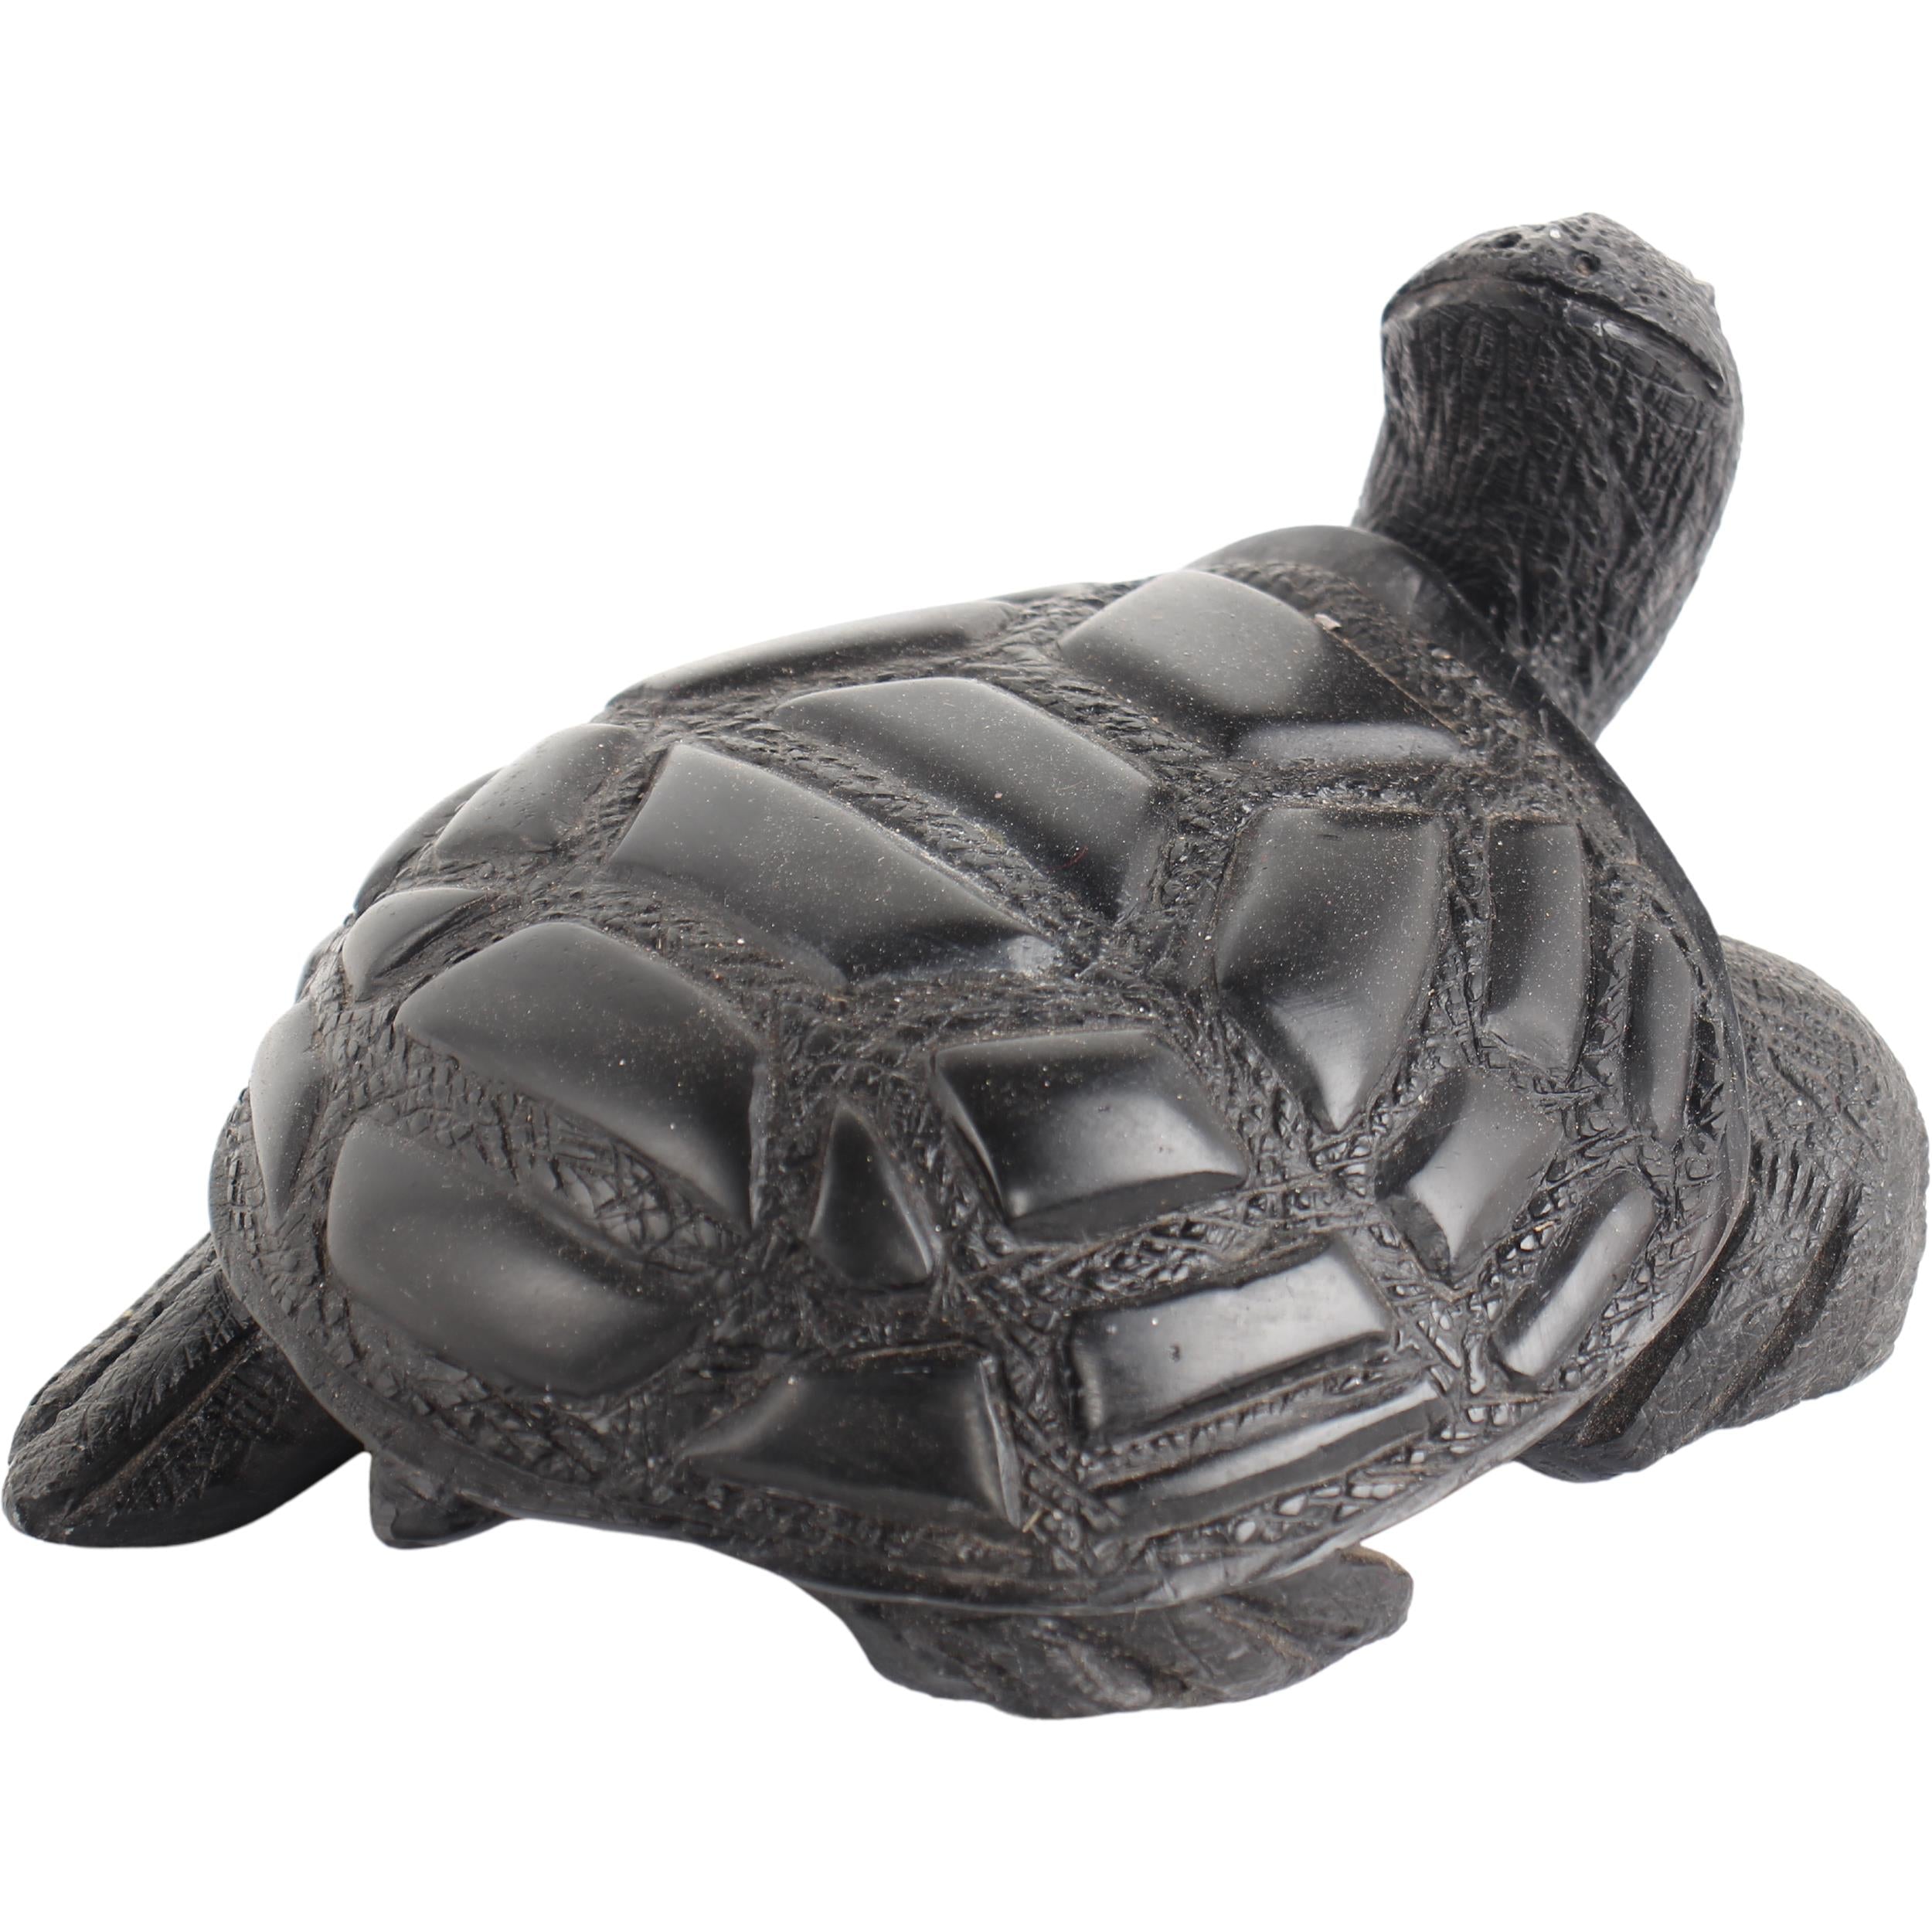 Shona Tribe Serpentine Stone Tortoise ~5.5" Tall - Tortoise